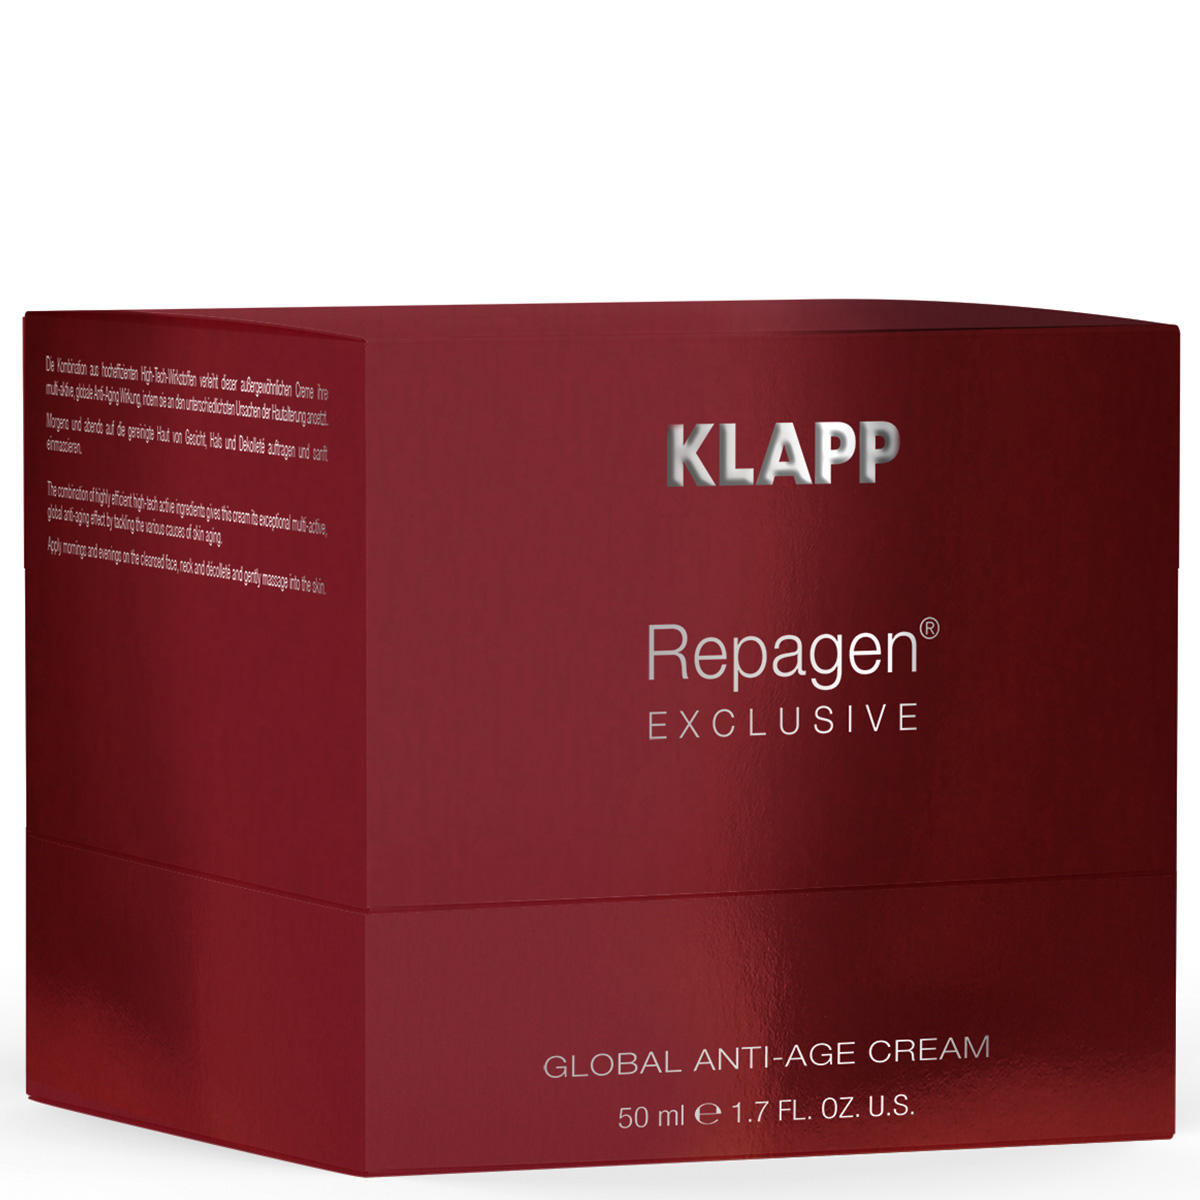 KLAPP REPAGEN EXCLUSIVE Global Anti-Age Cream 50 ml - 2